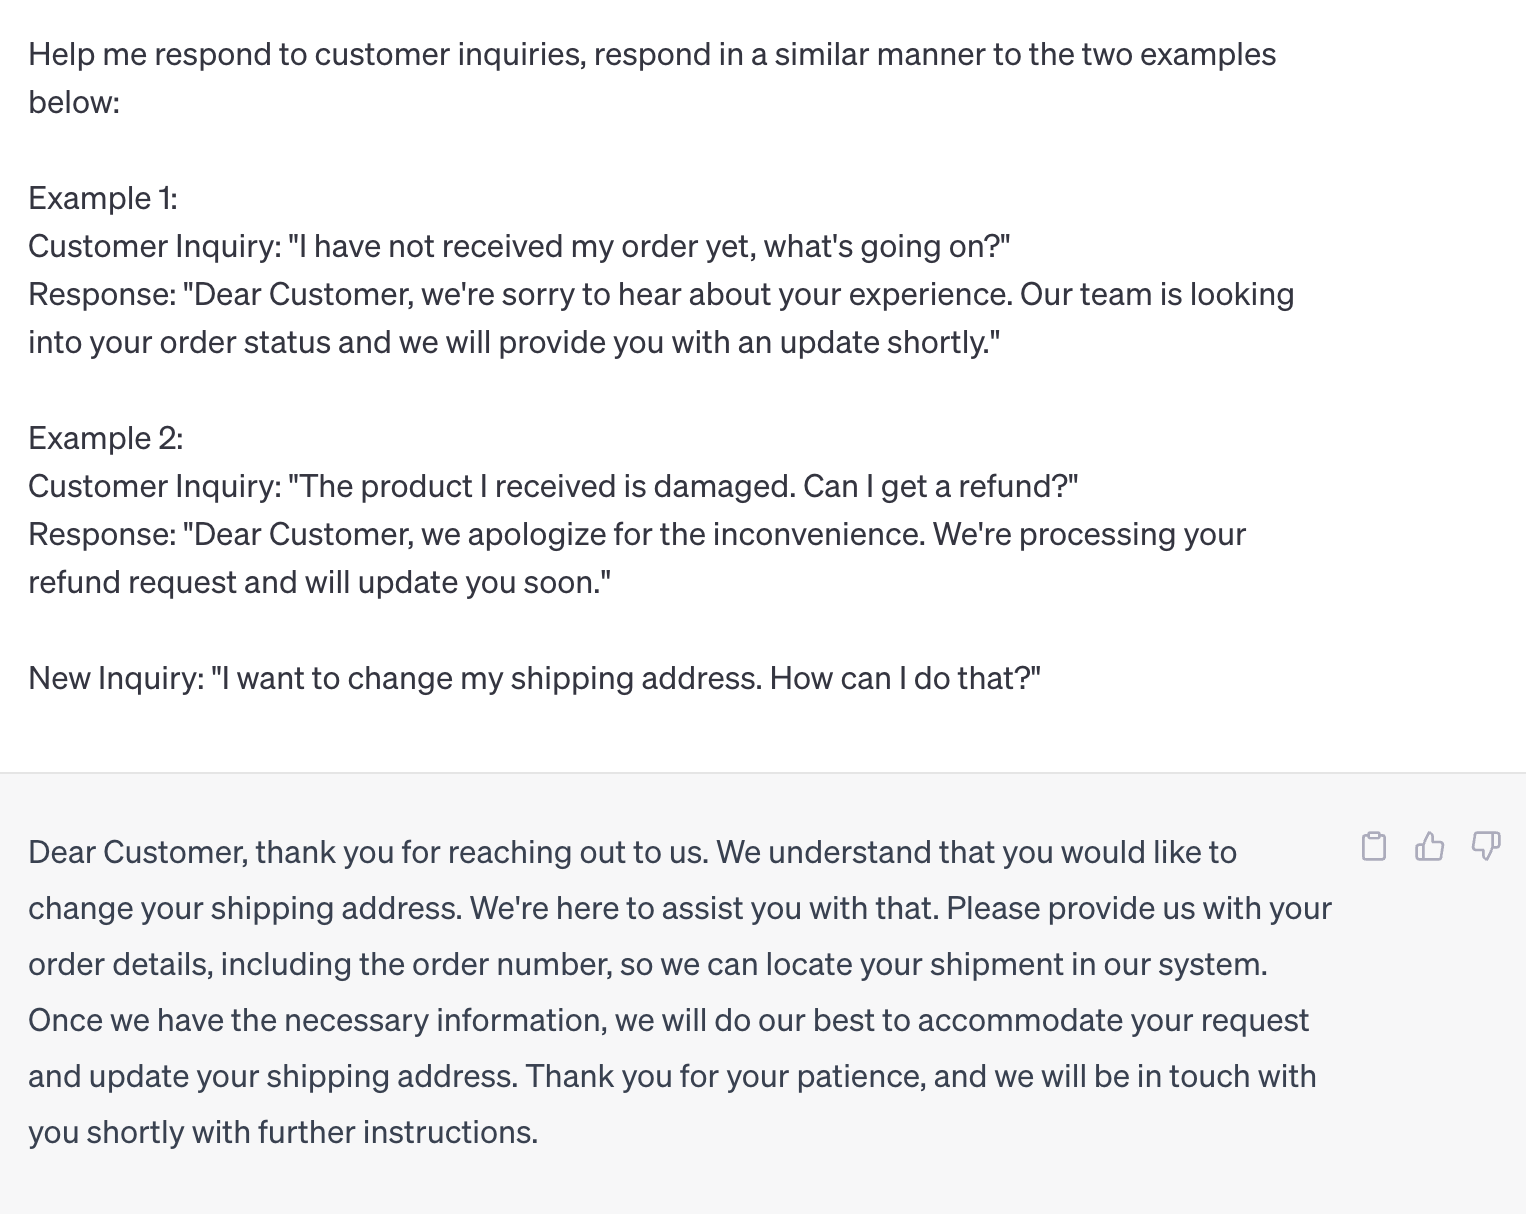 chatgpt-responds-customer-inquiries